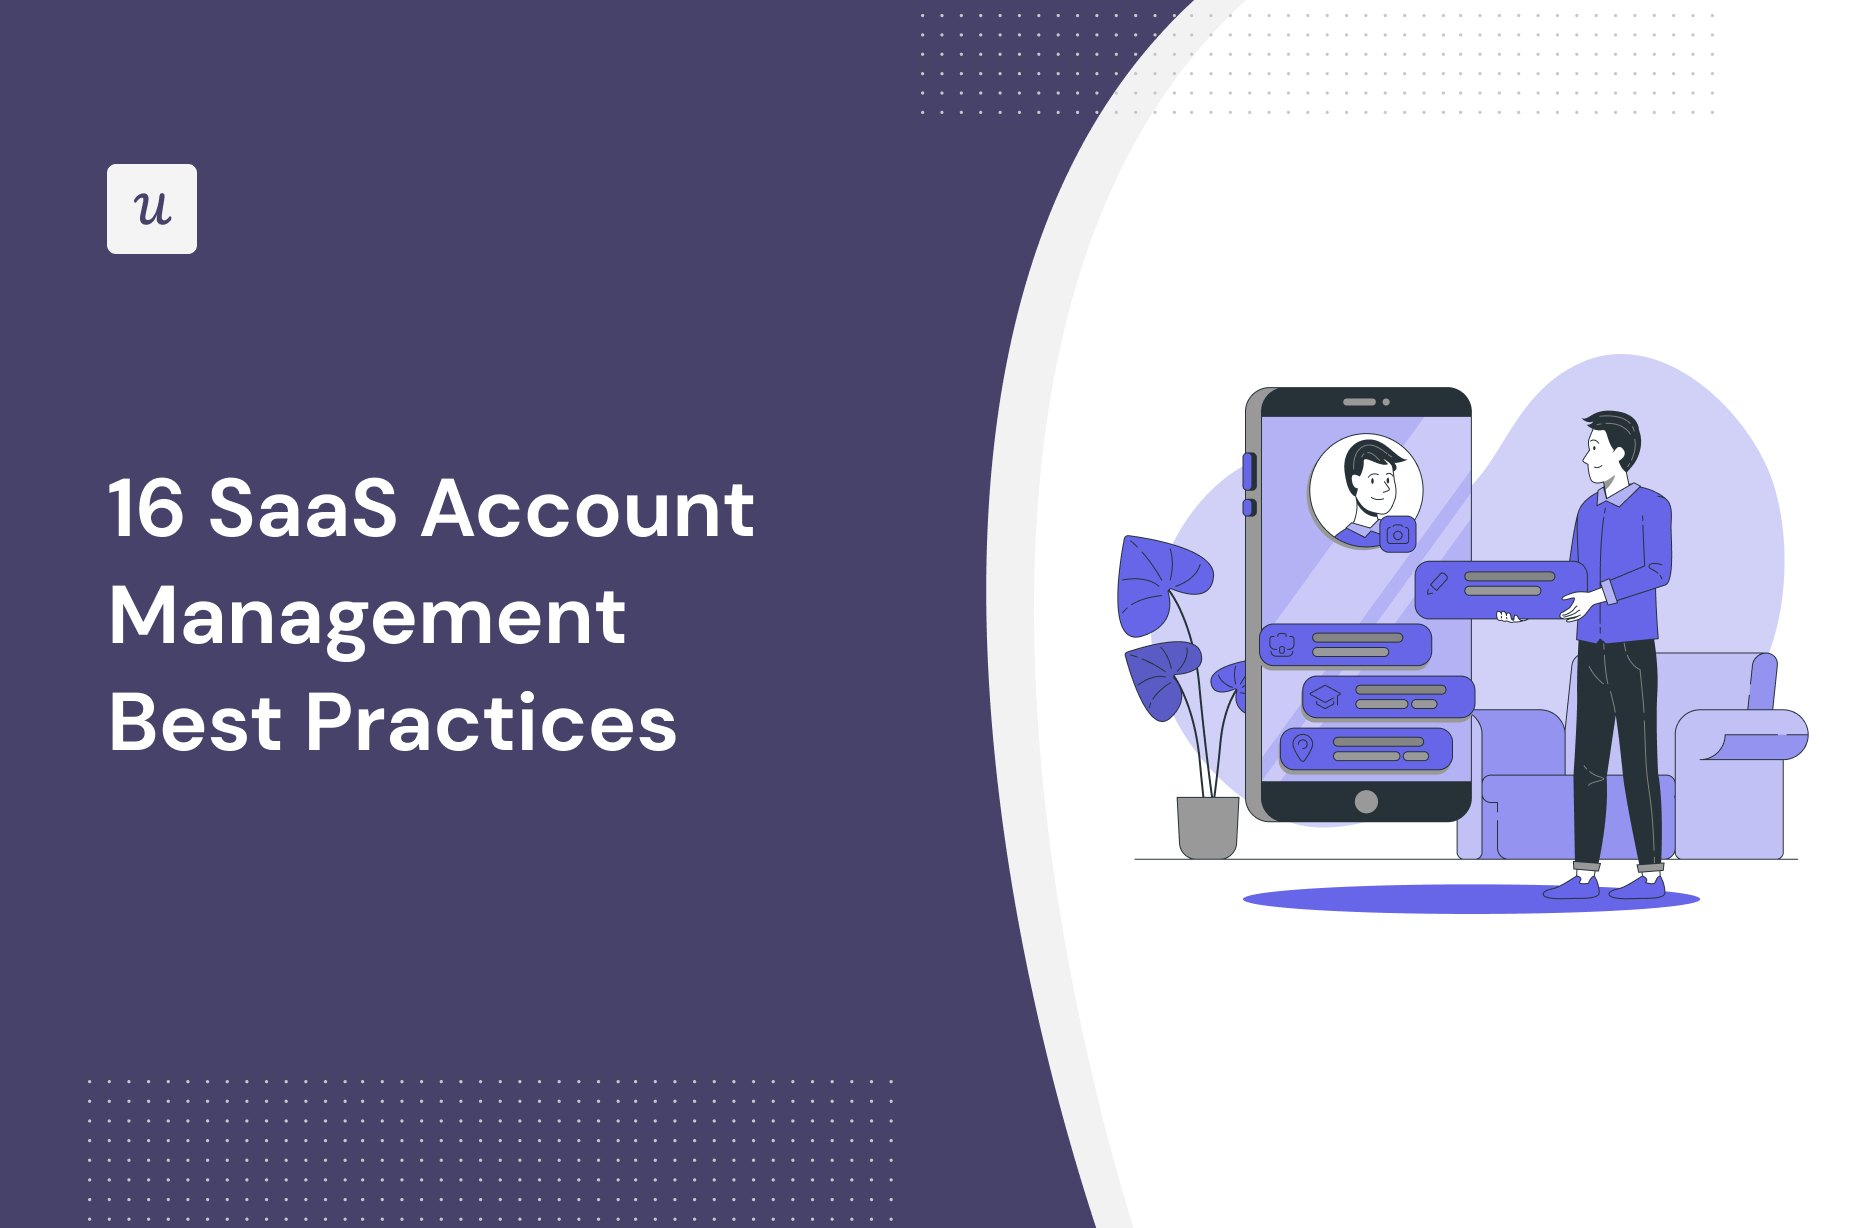 16 SaaS Account Management Best Practices